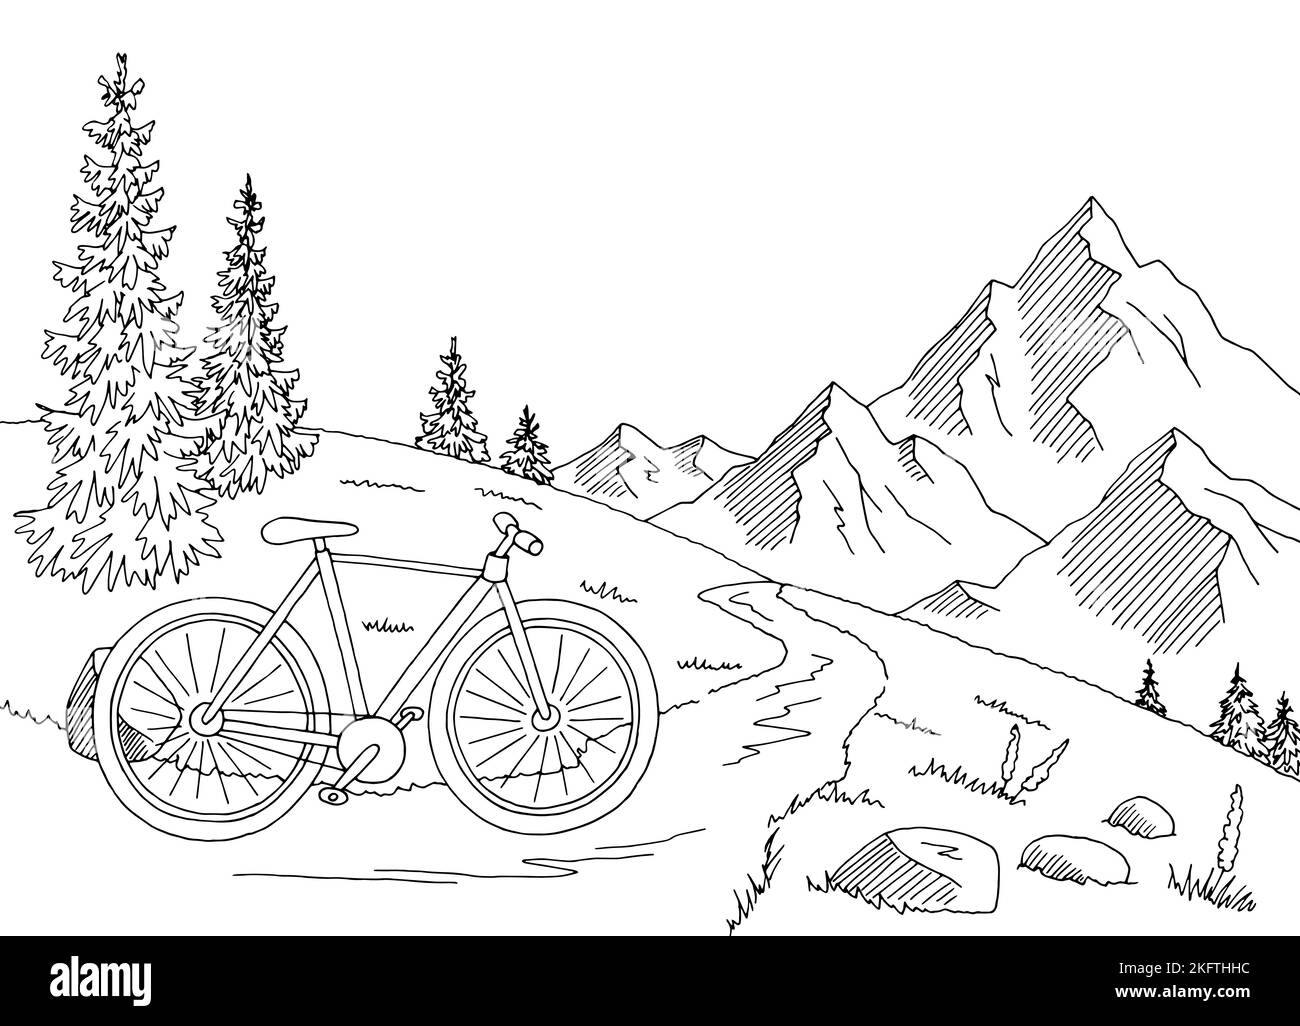 Fahrrad in Berg Grafik schwarz weiß Landschaft Skizze Illustration Vektor Stock Vektor